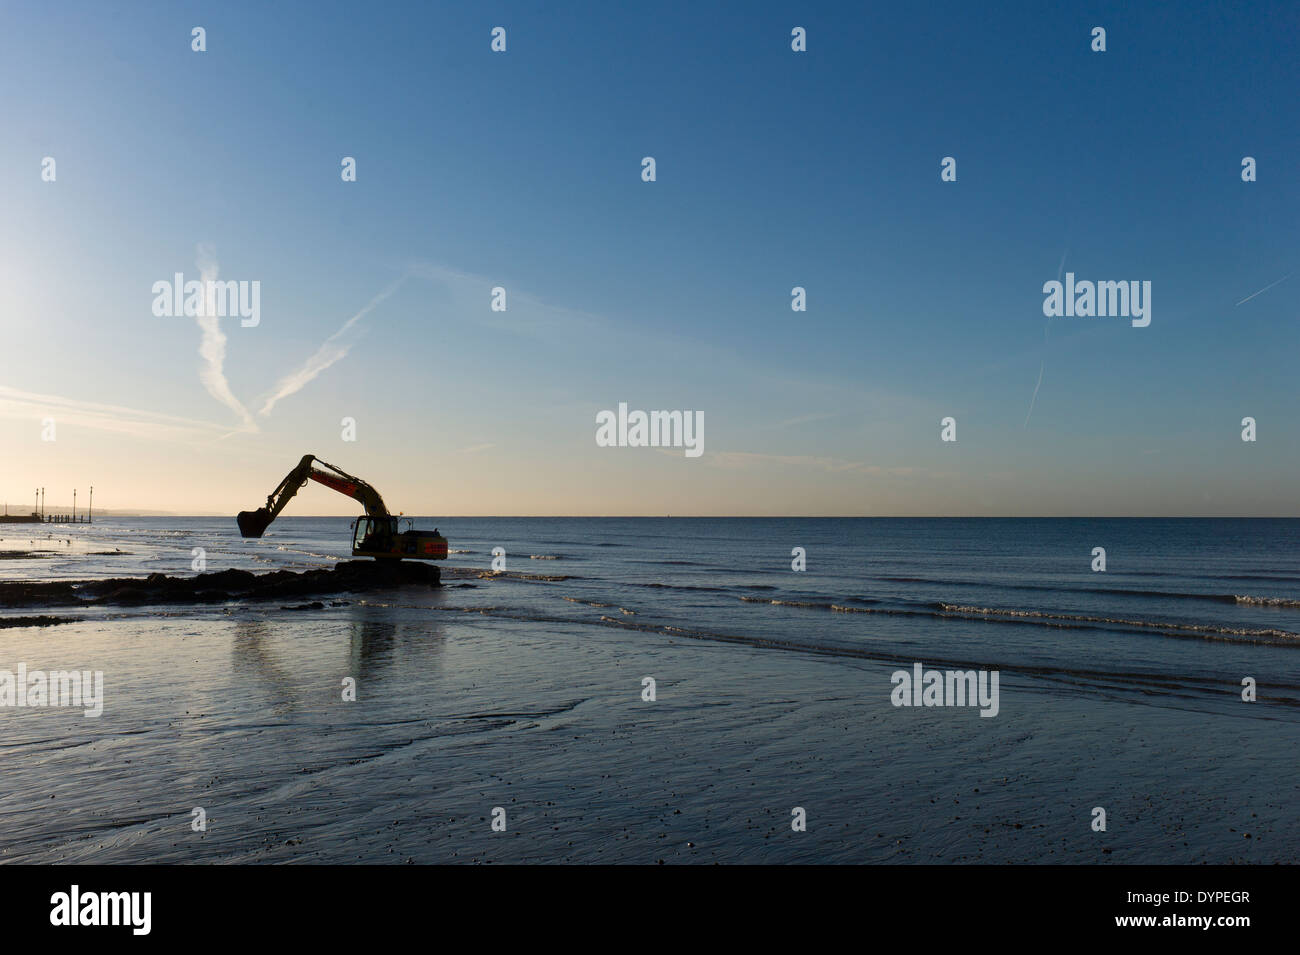 Backhoe digger on beach, low tide, sunrise, mechanical excavator Stock Photo